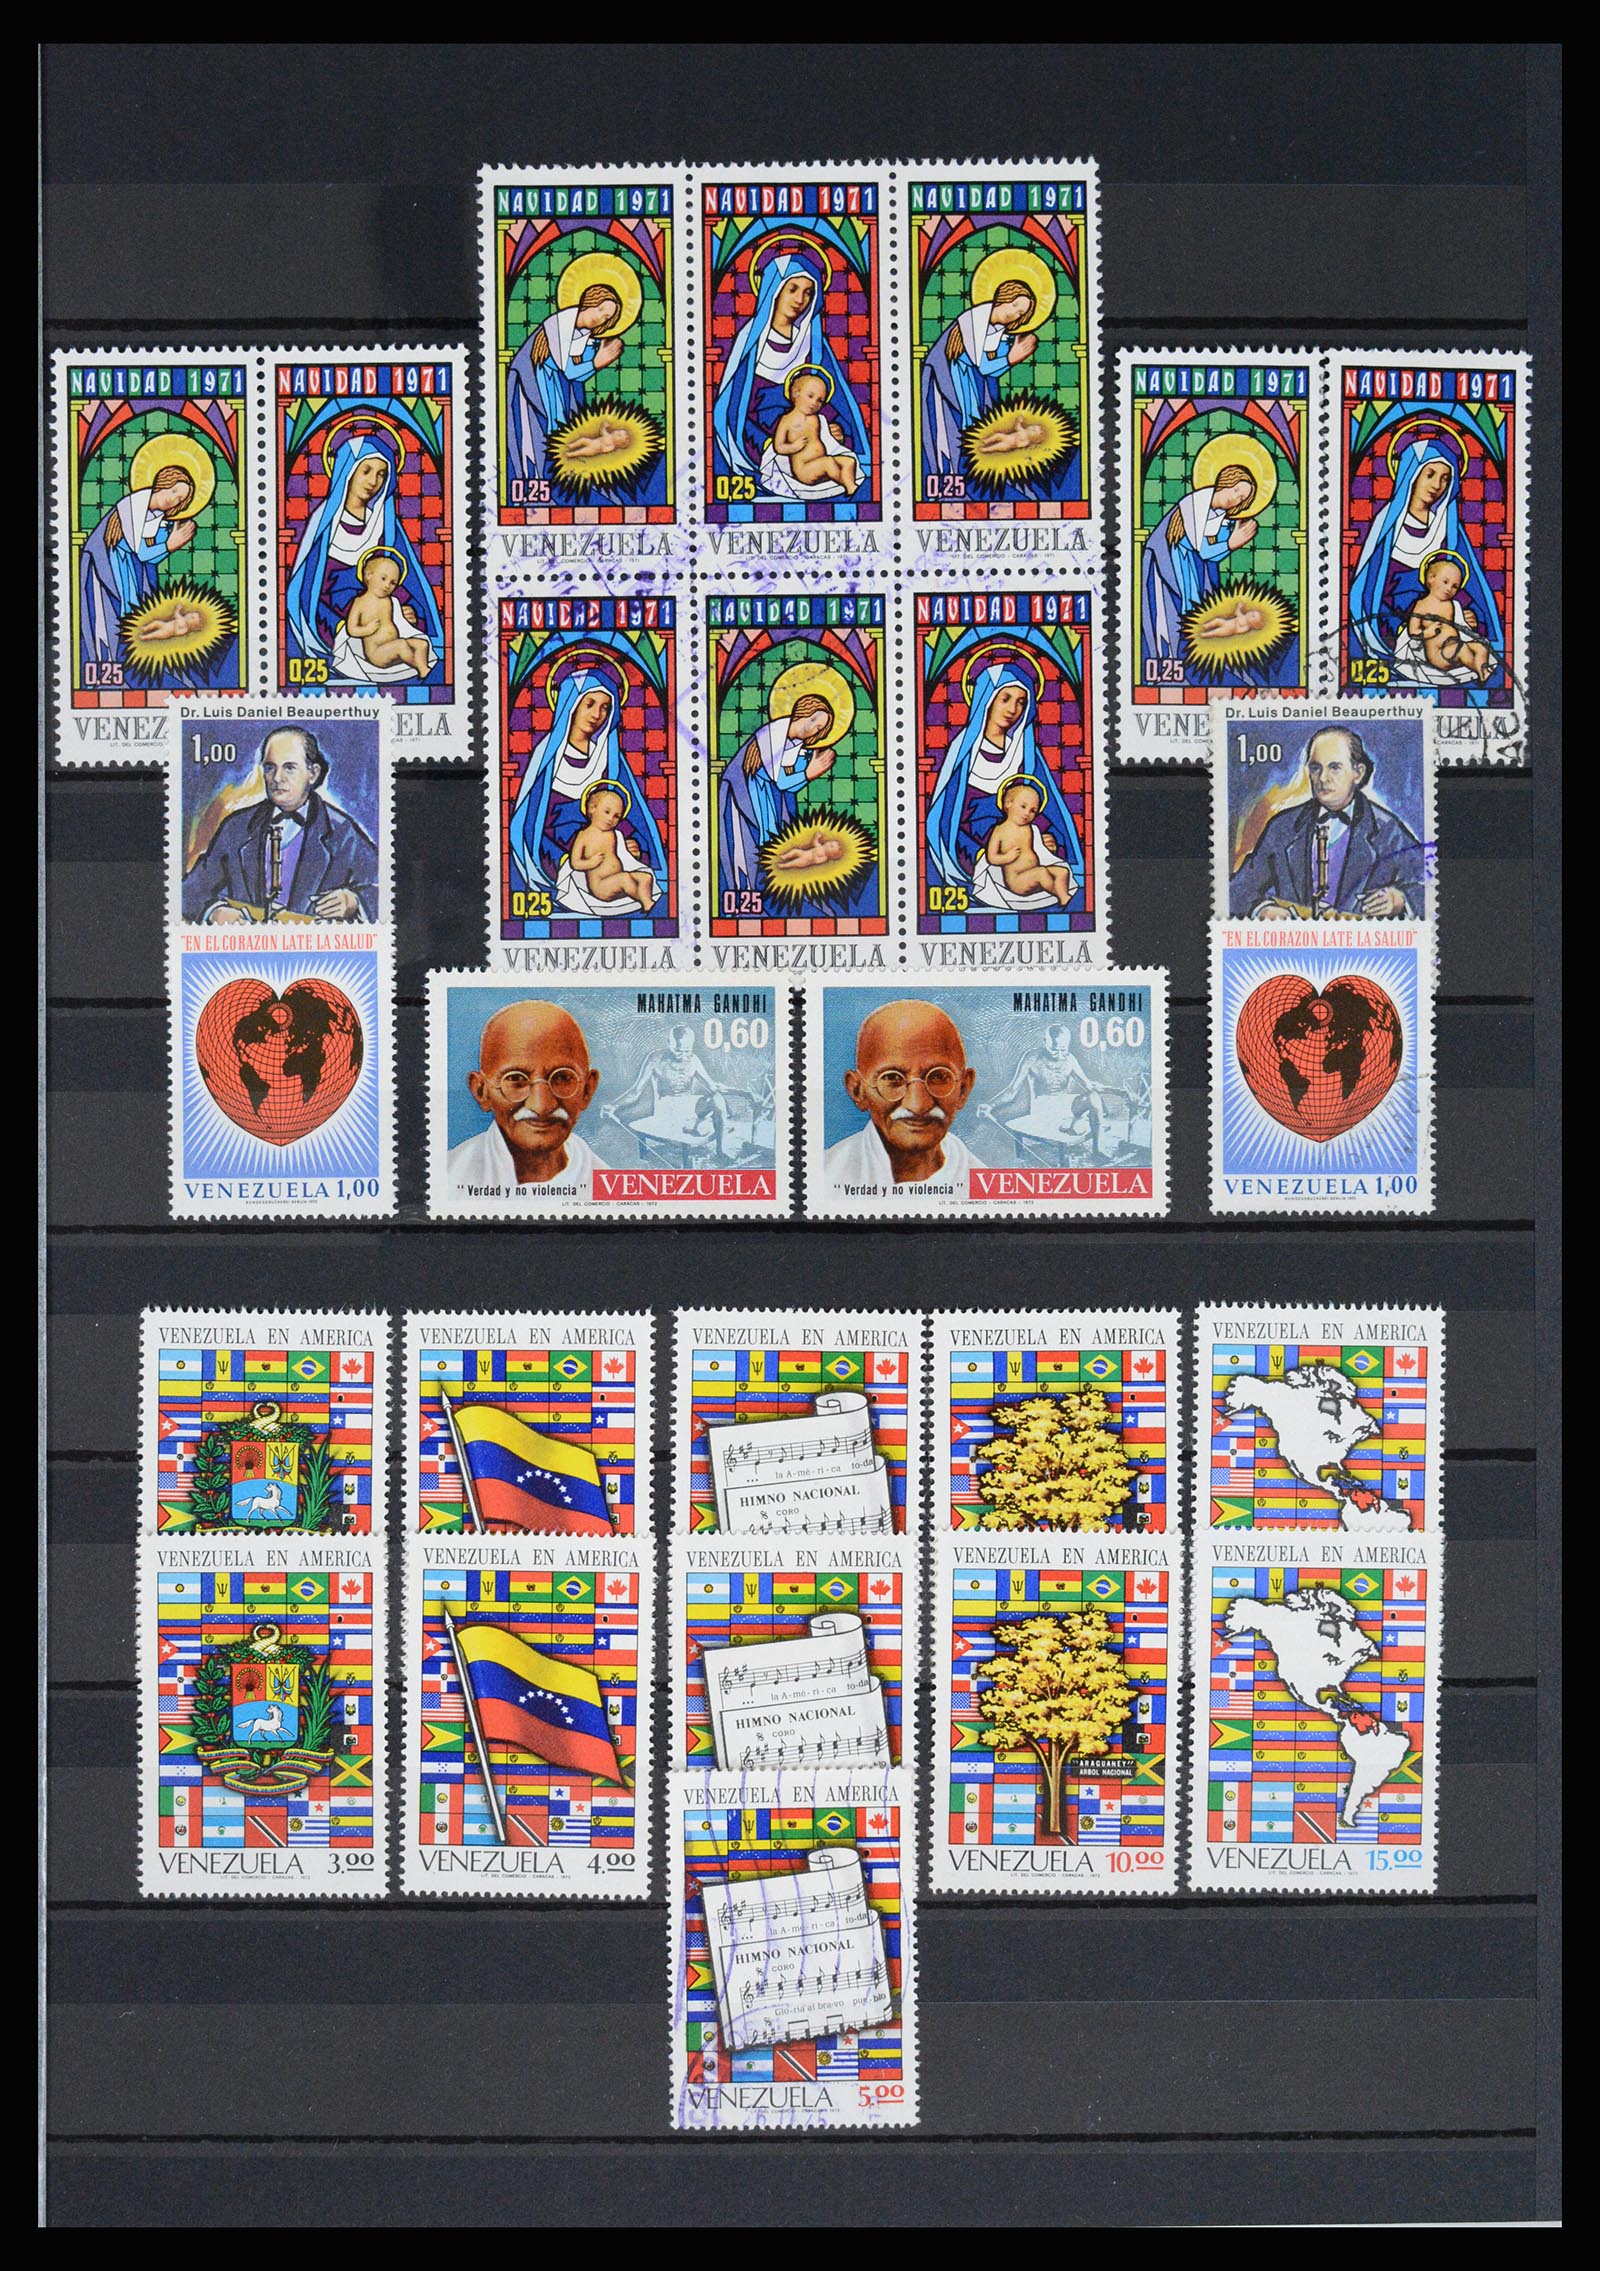 36987 062 - Stamp collection 36987 Venezuela 1860-1995.